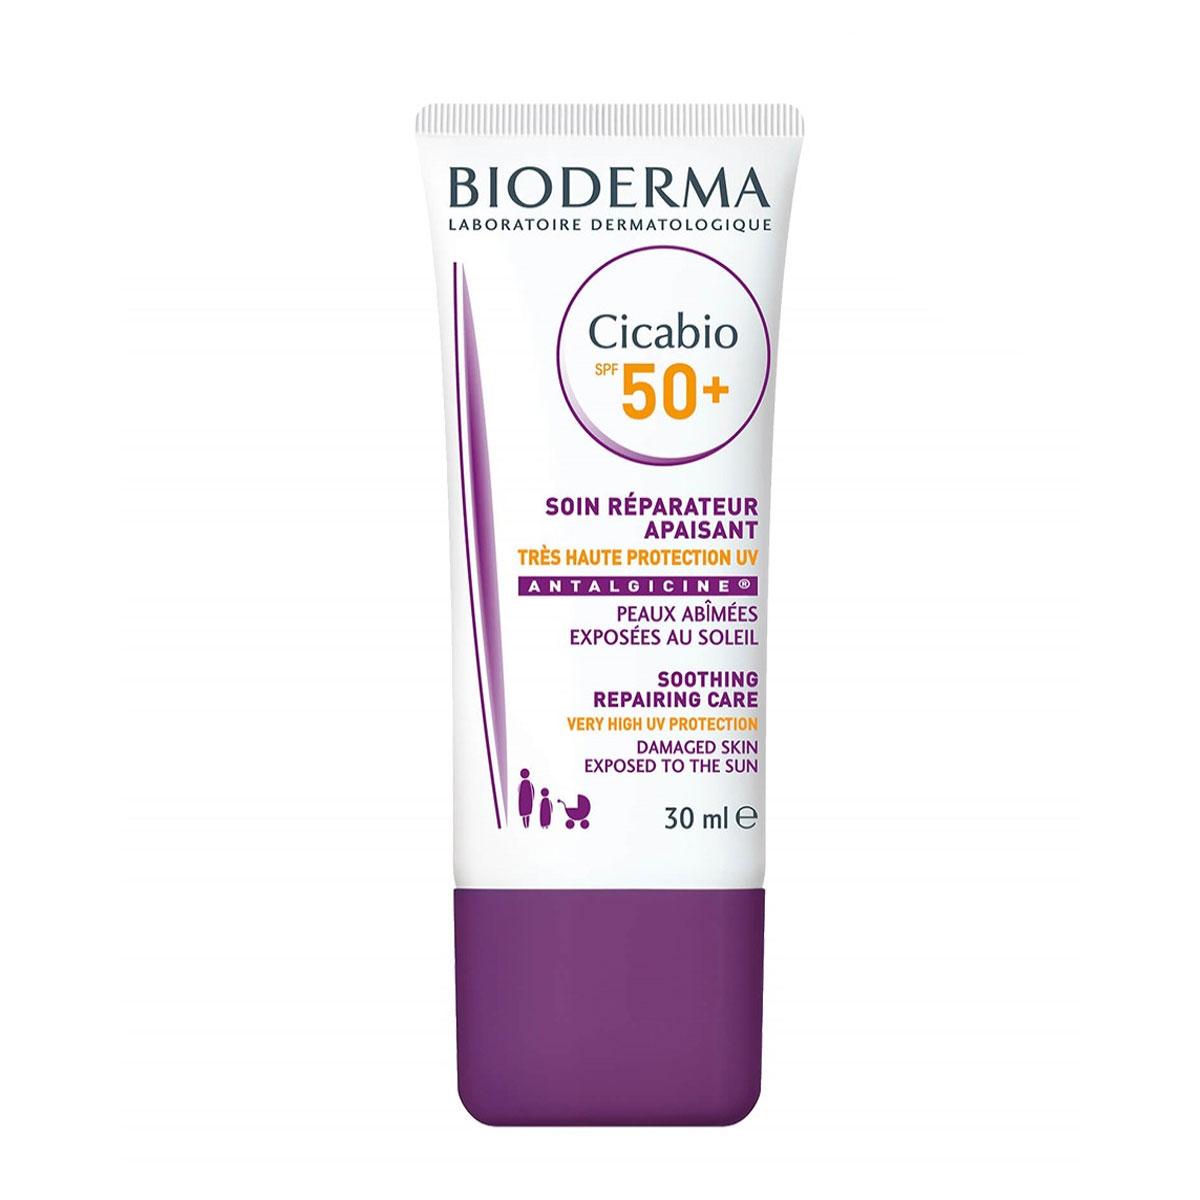 کرم ضد آفتاب و ترمیم کننده مدل سیکابیو SPF 50 - Bioderma Cicabio Soothing Repairing Care Cream SPF 50